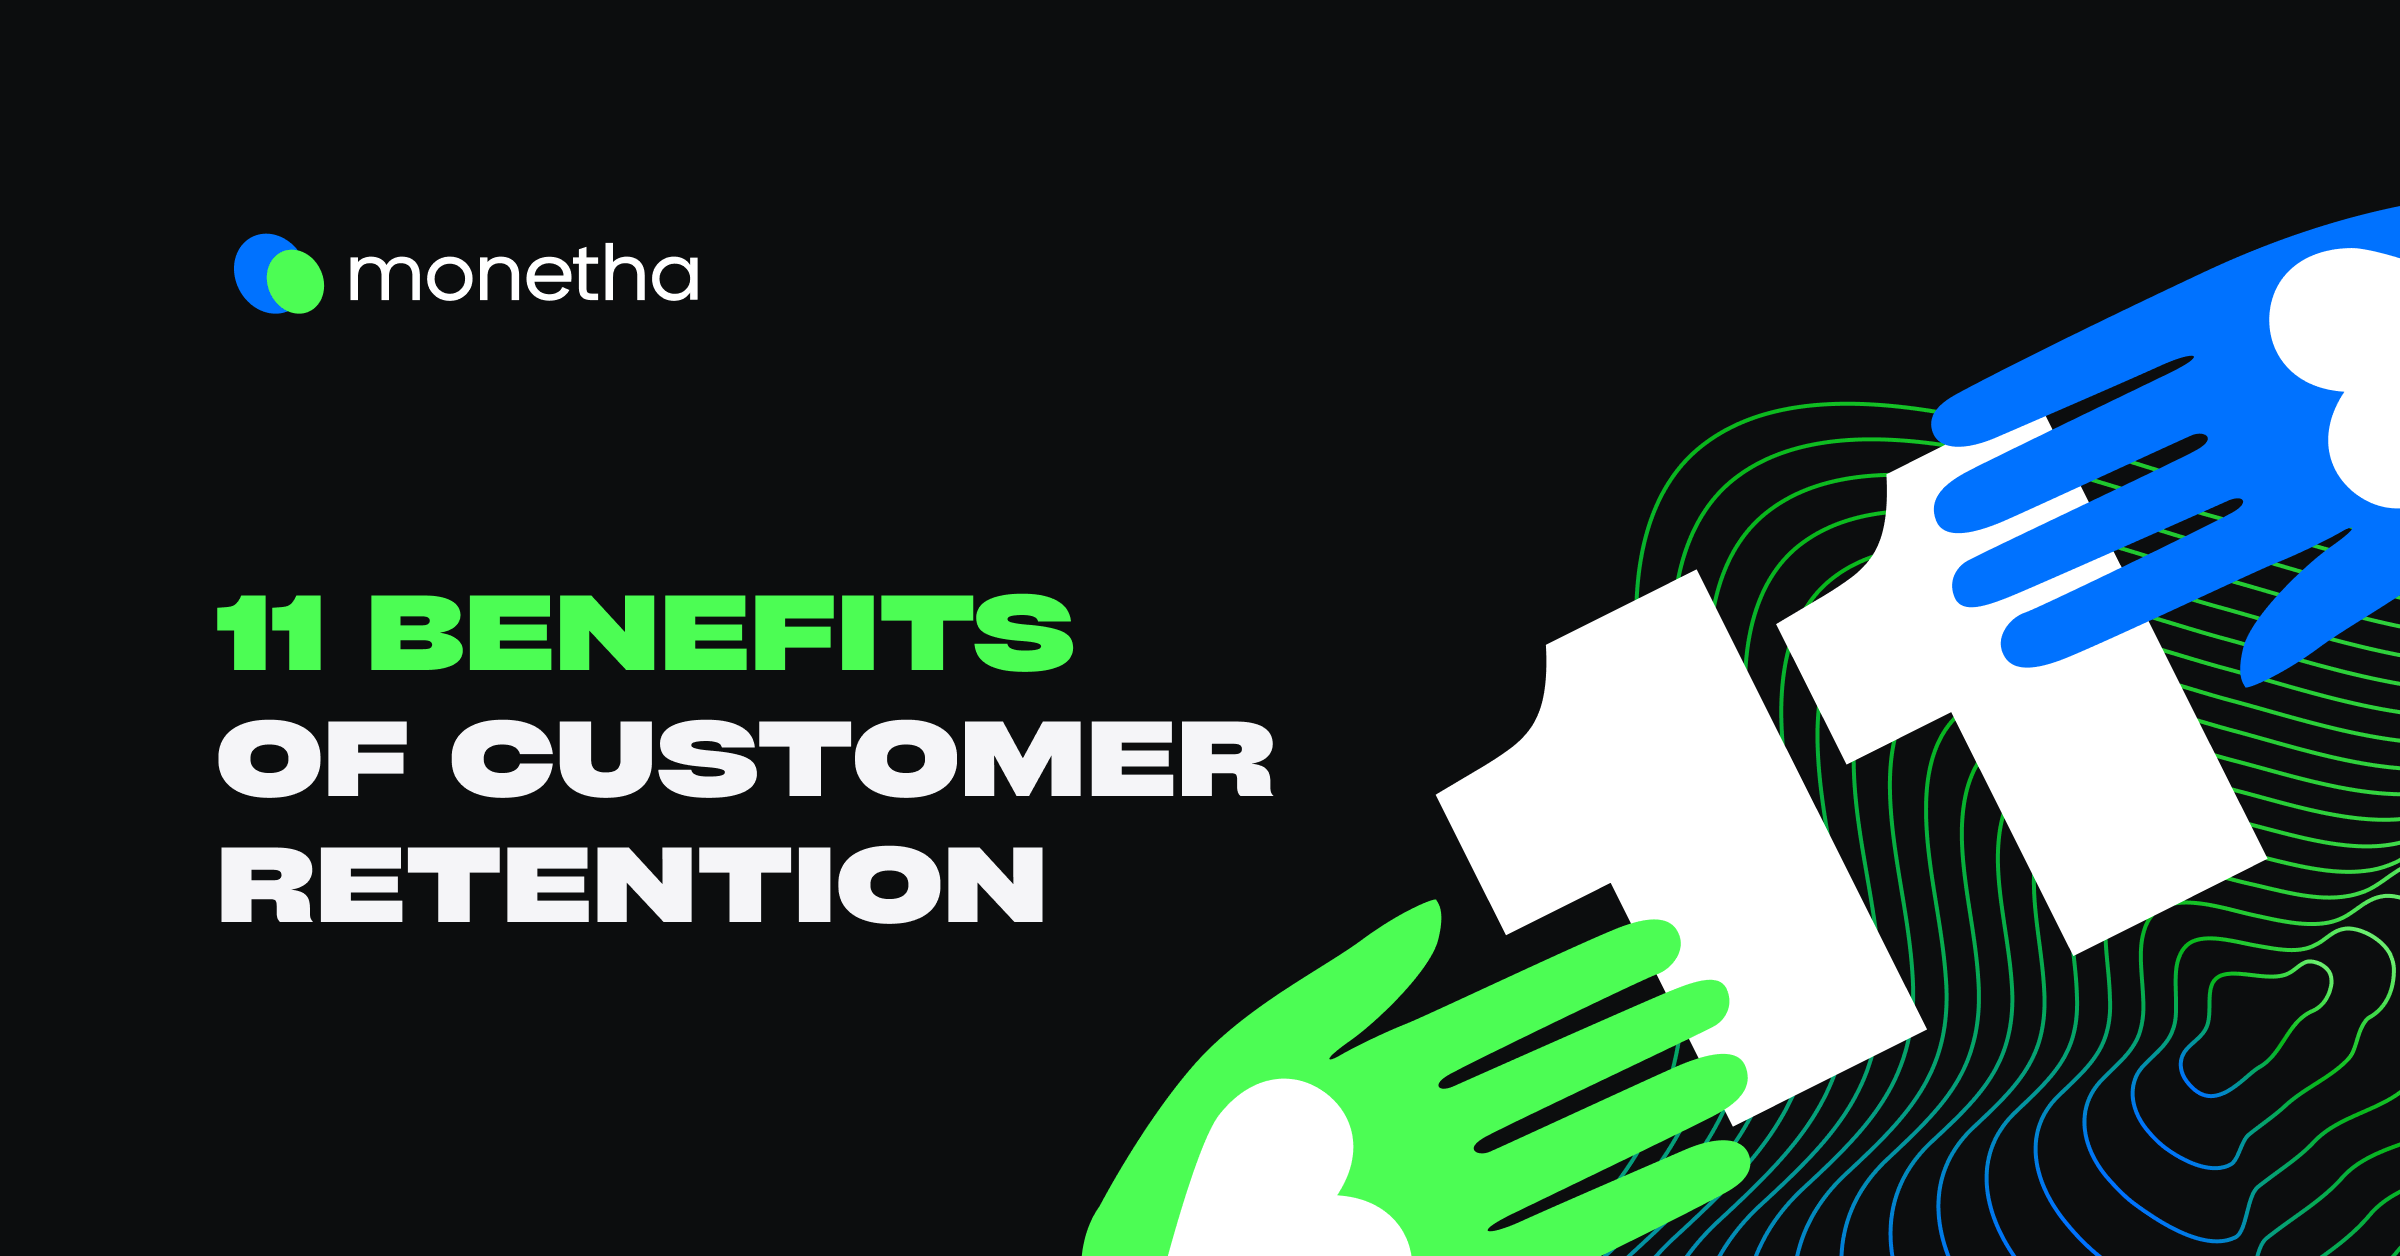 customer retention benefits image 1